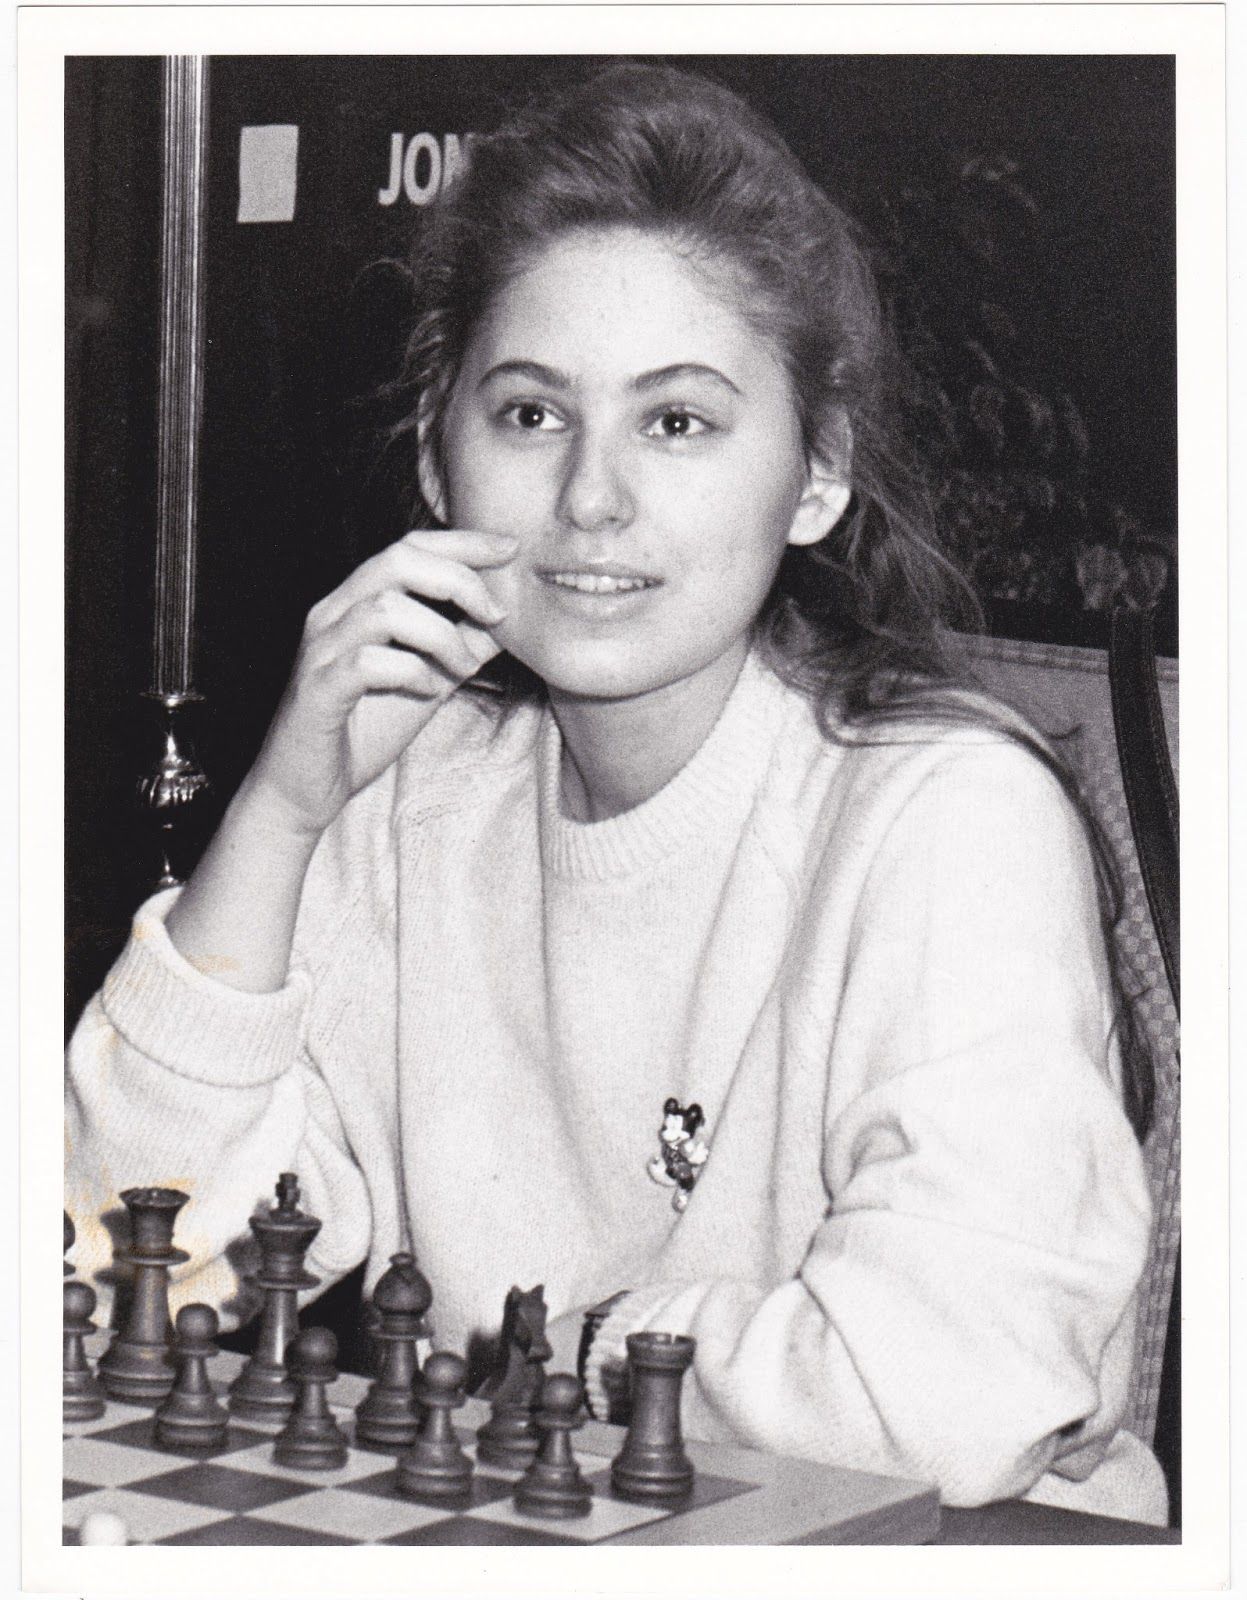 Judit Polgár, Best-Ever Female Chess Player, Teaches NYC Kids to